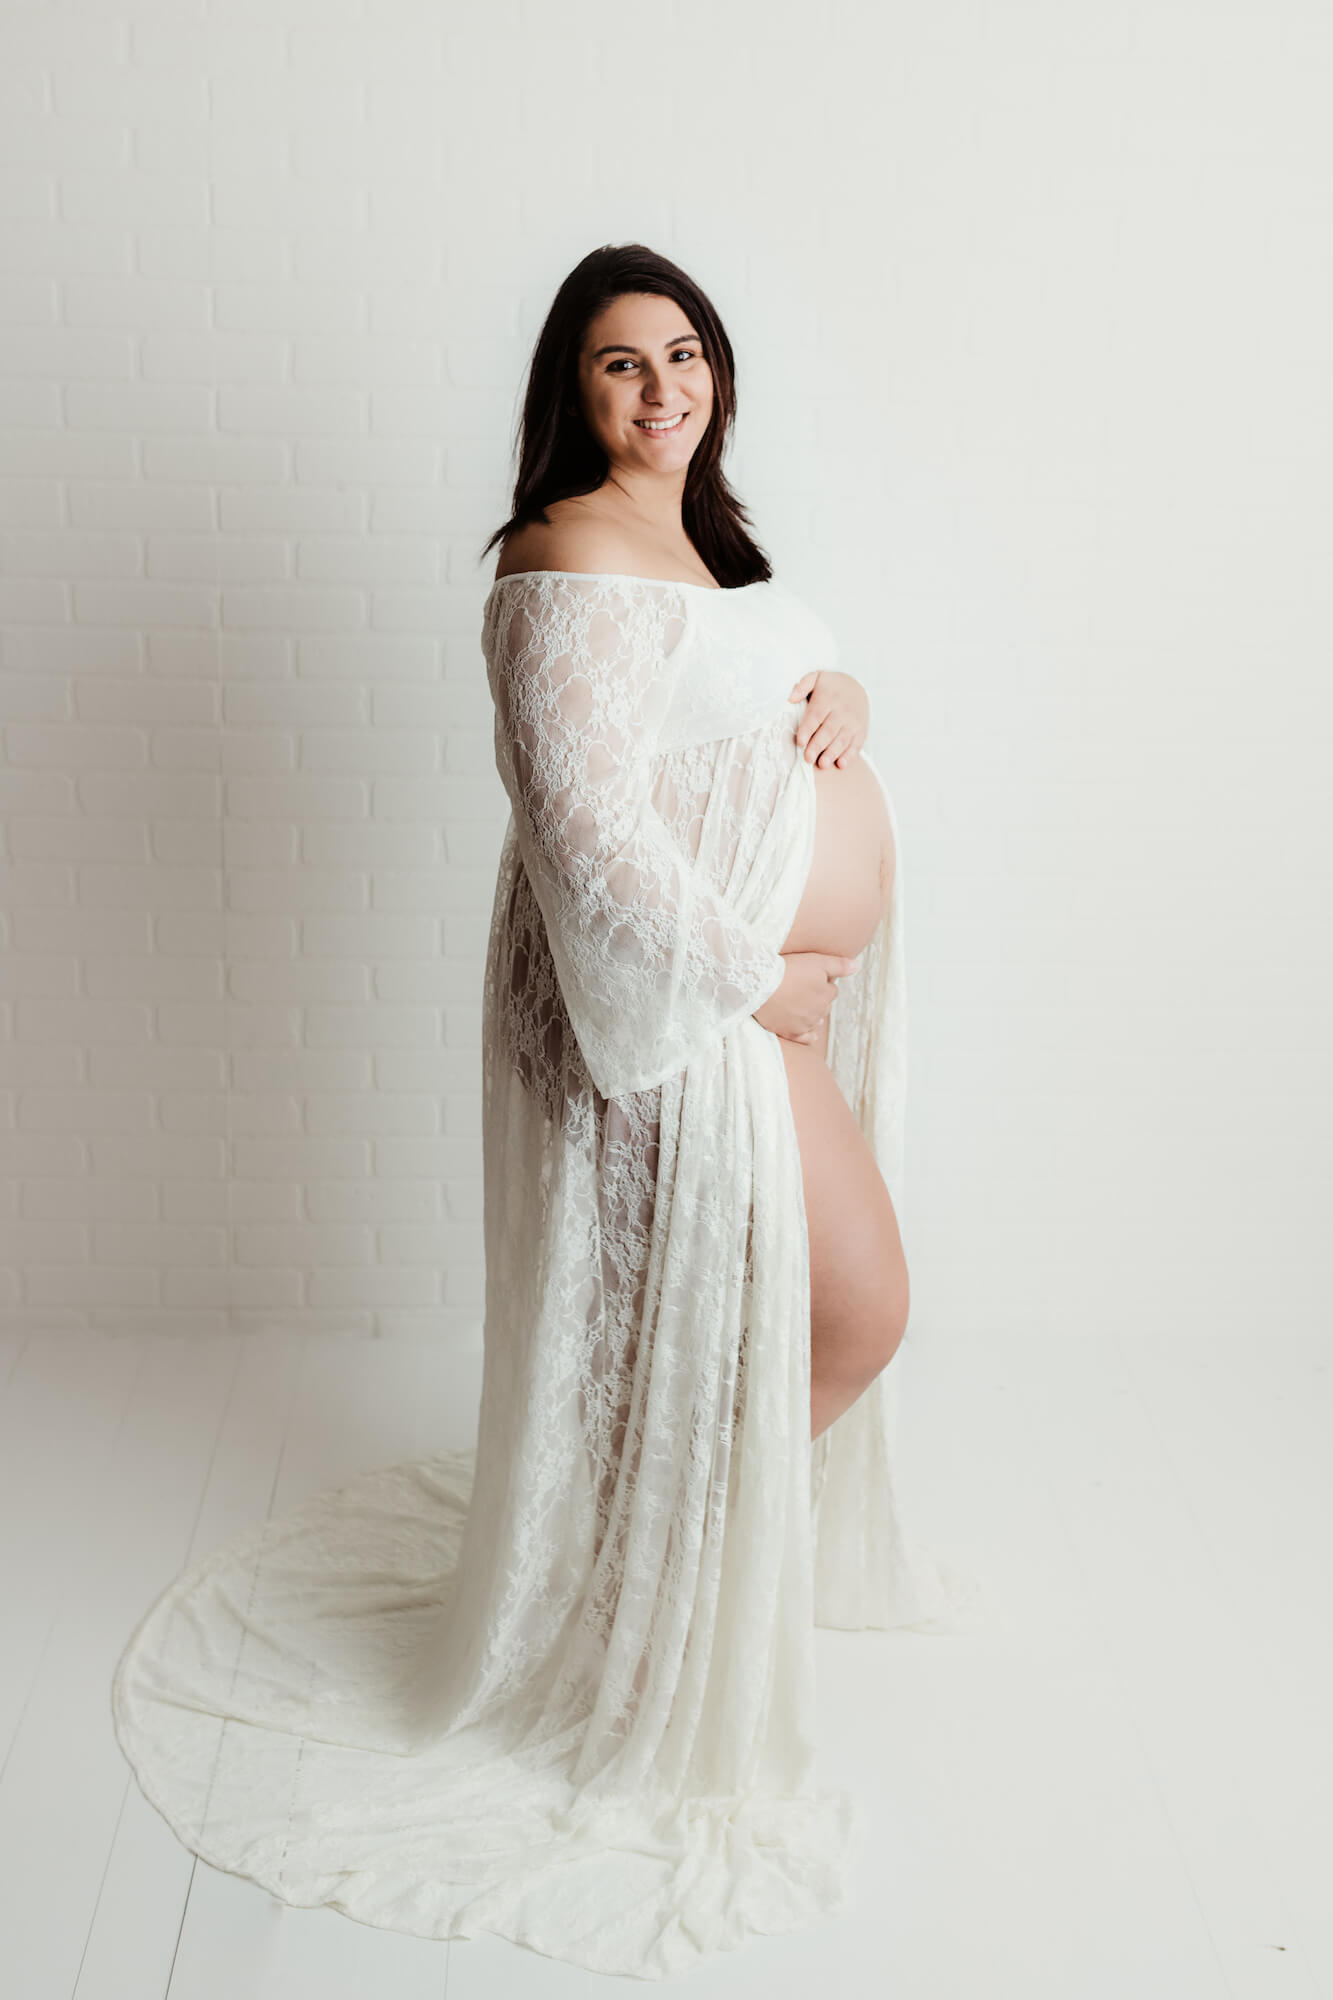 studio-maternity-portraits-cobb-county-pregnancy-photoshoot